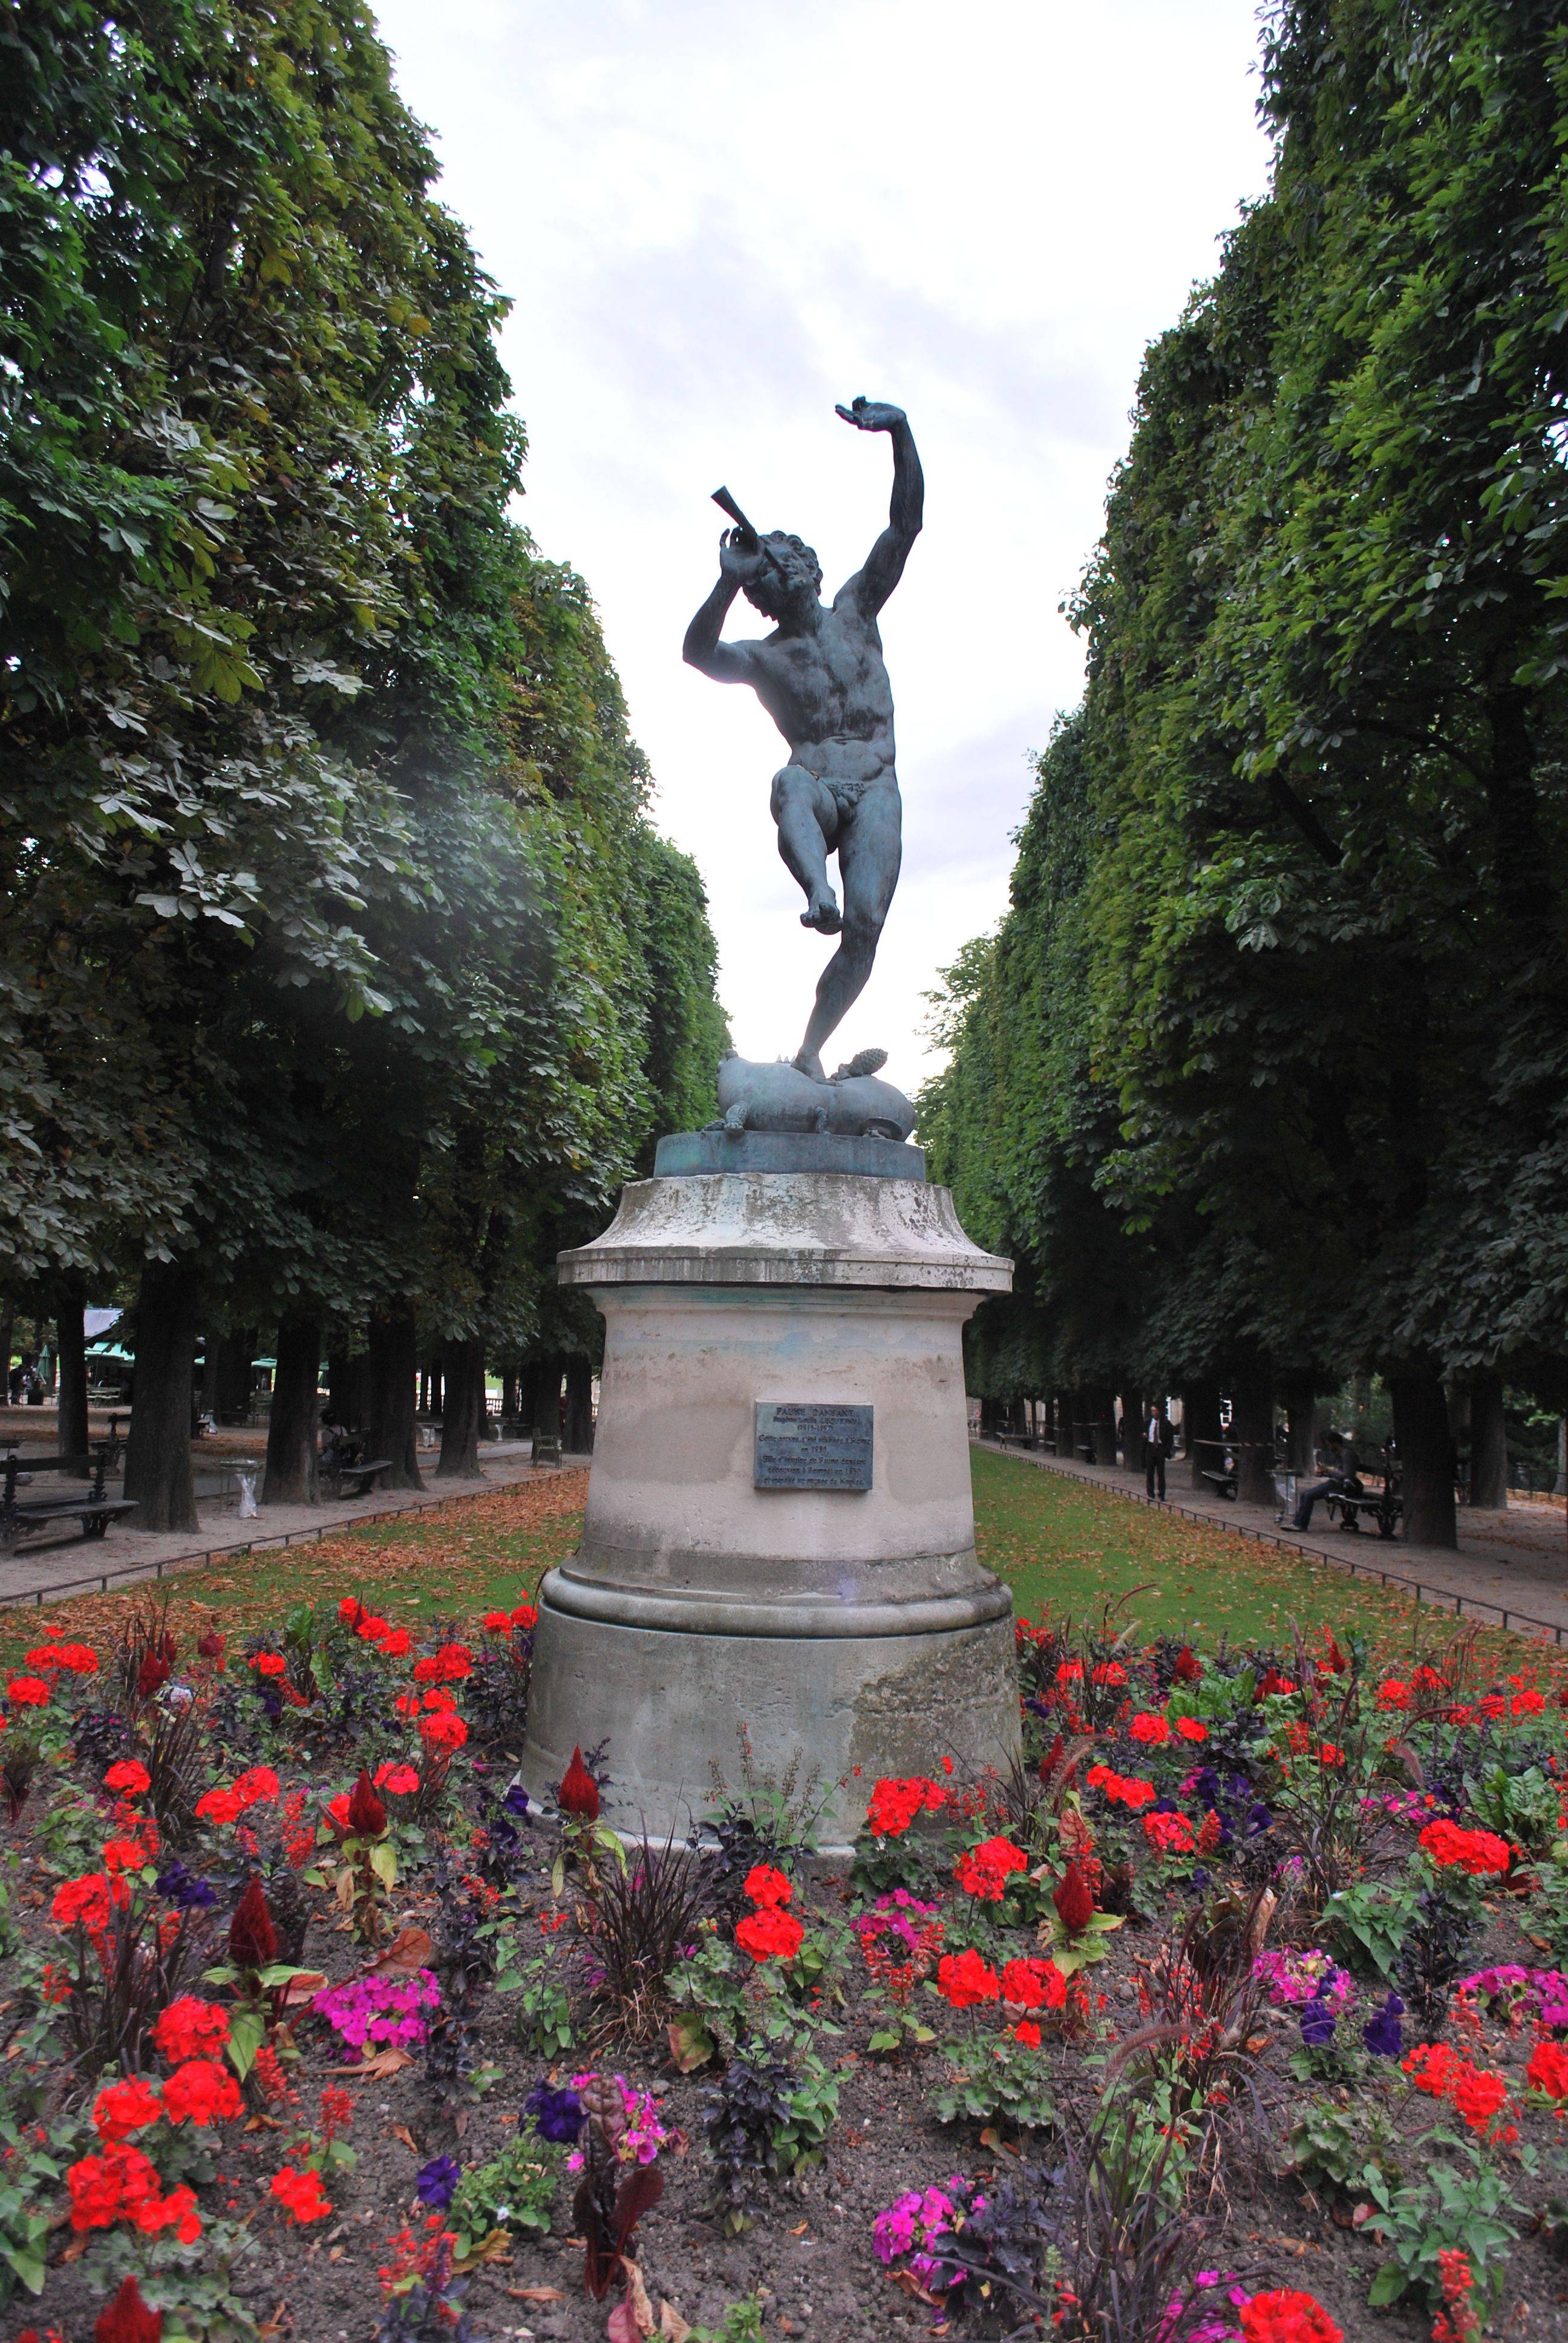 Paris Luxembourg Gardens